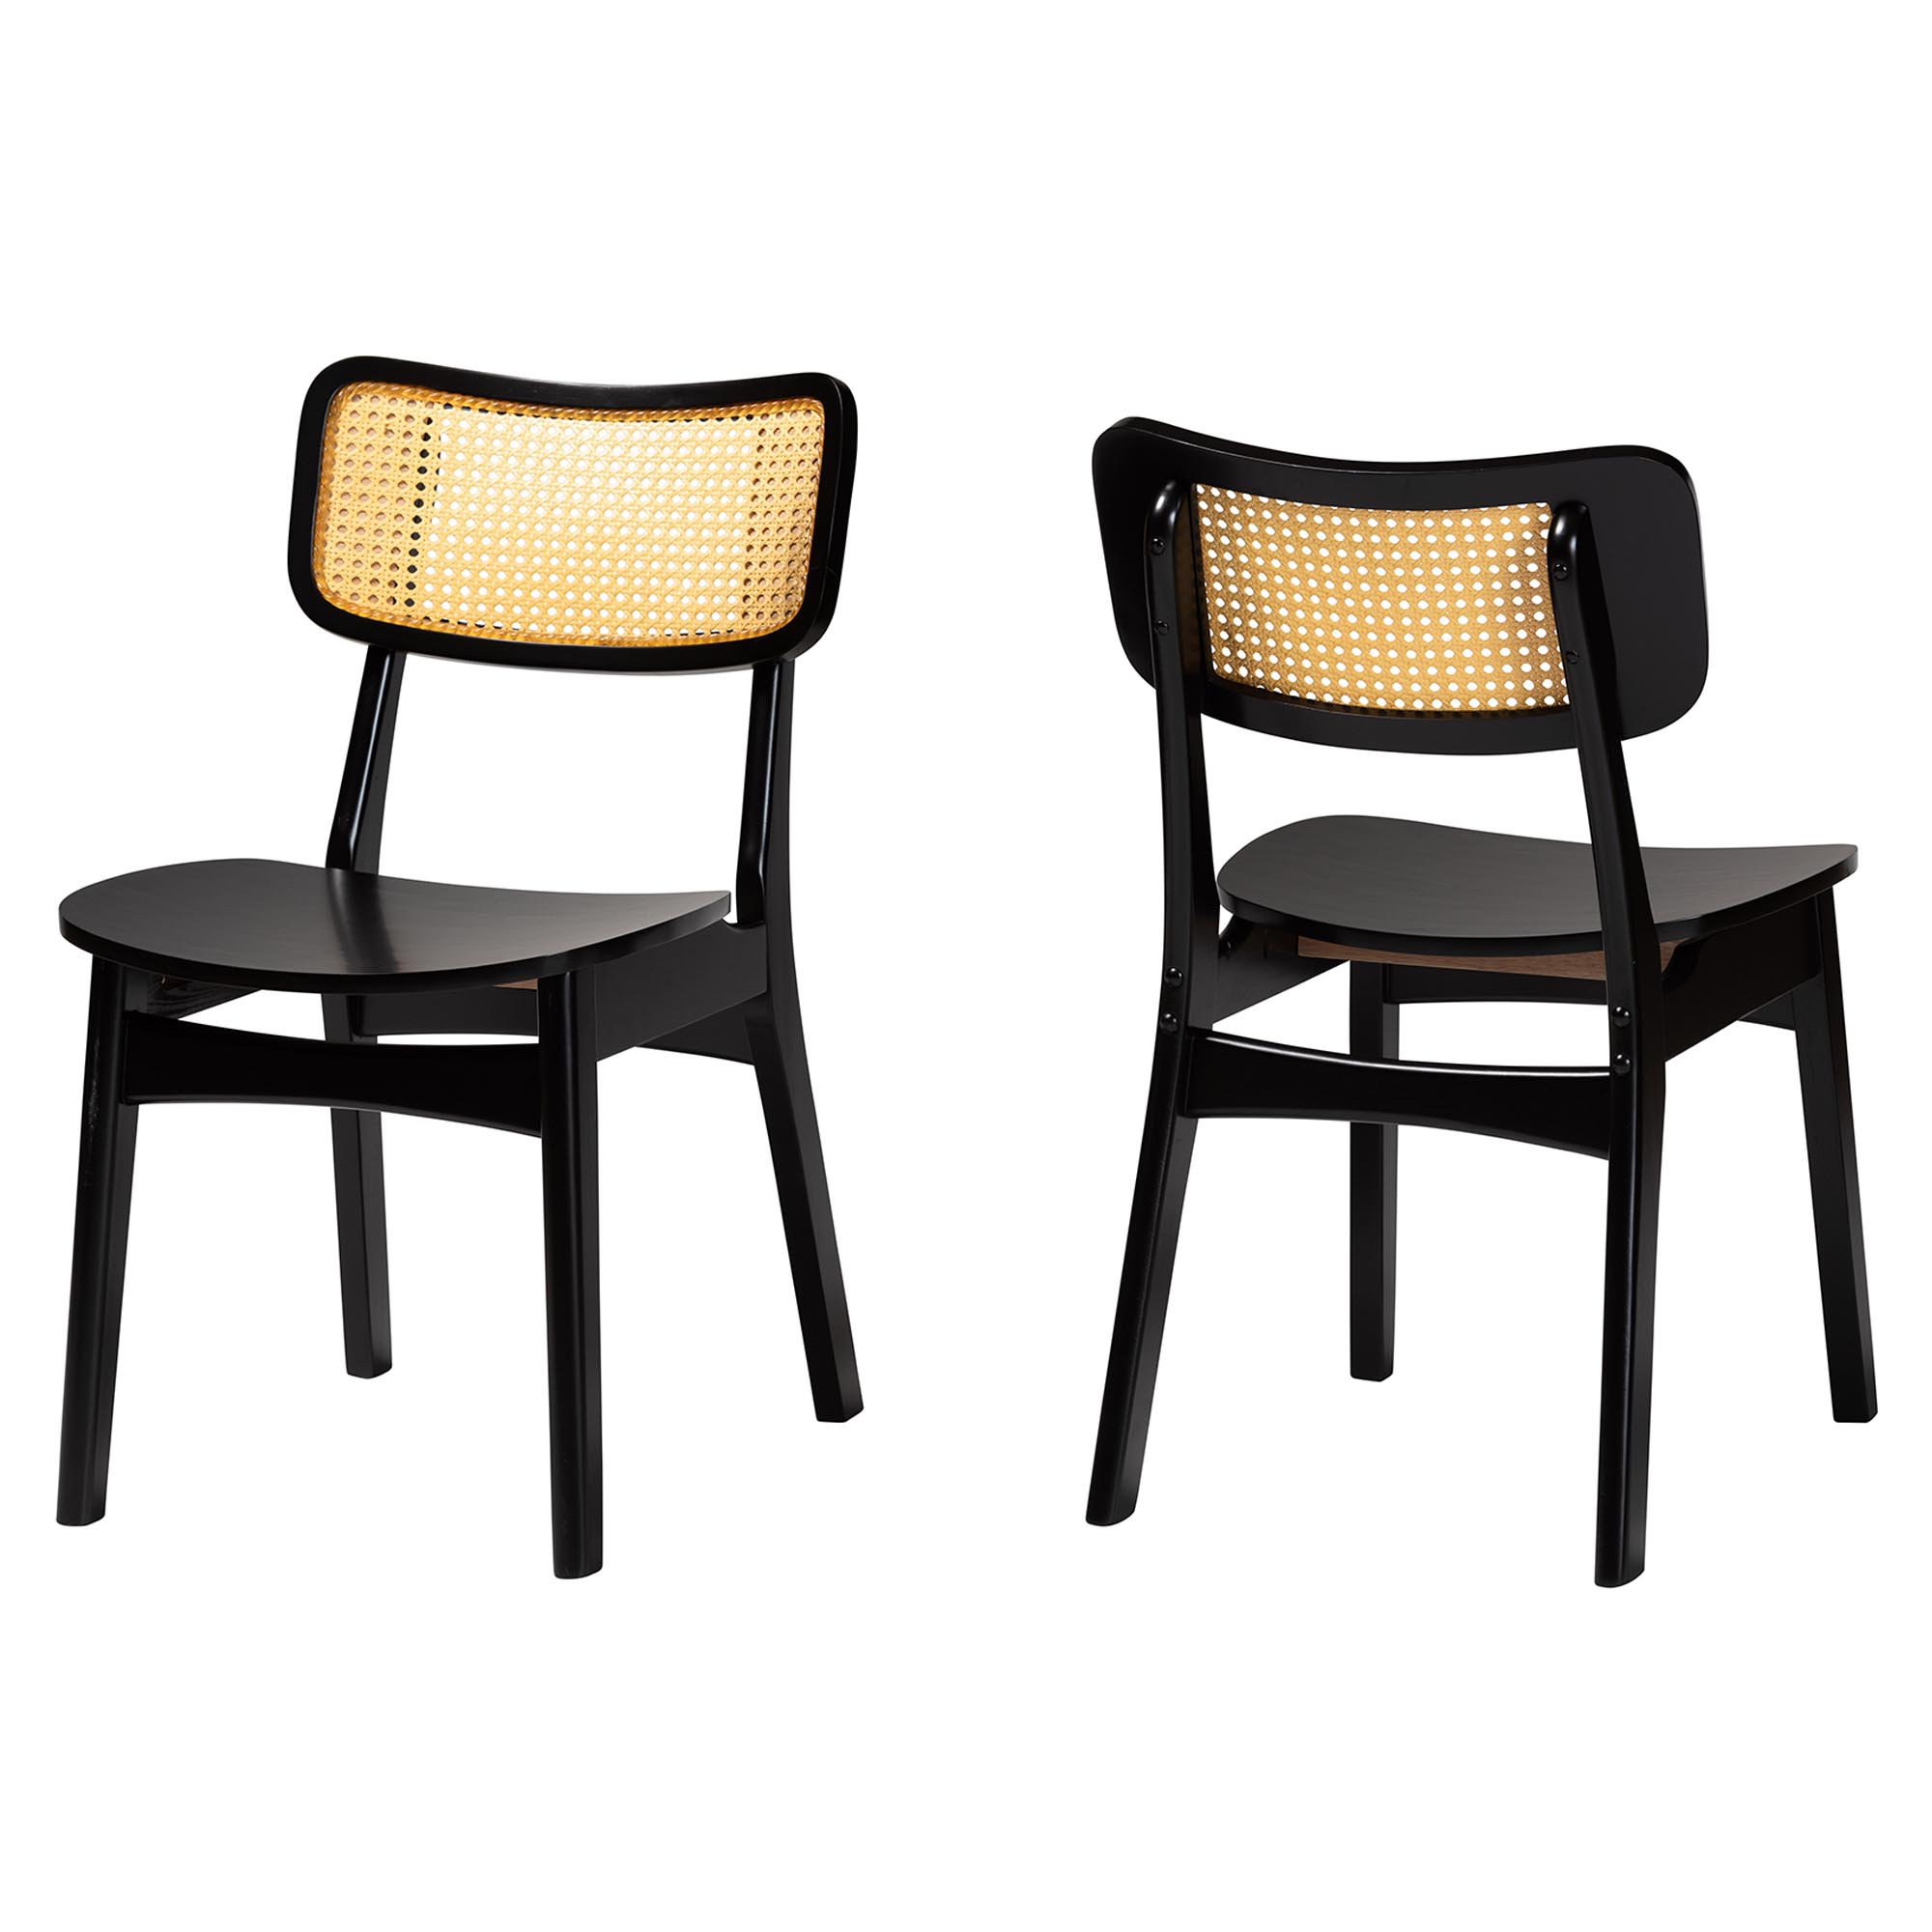 Baxton Studio Tafari Mid-Century Modern Dark Brown Finished Wood and Rattan 2-Piece Dining Chair Set